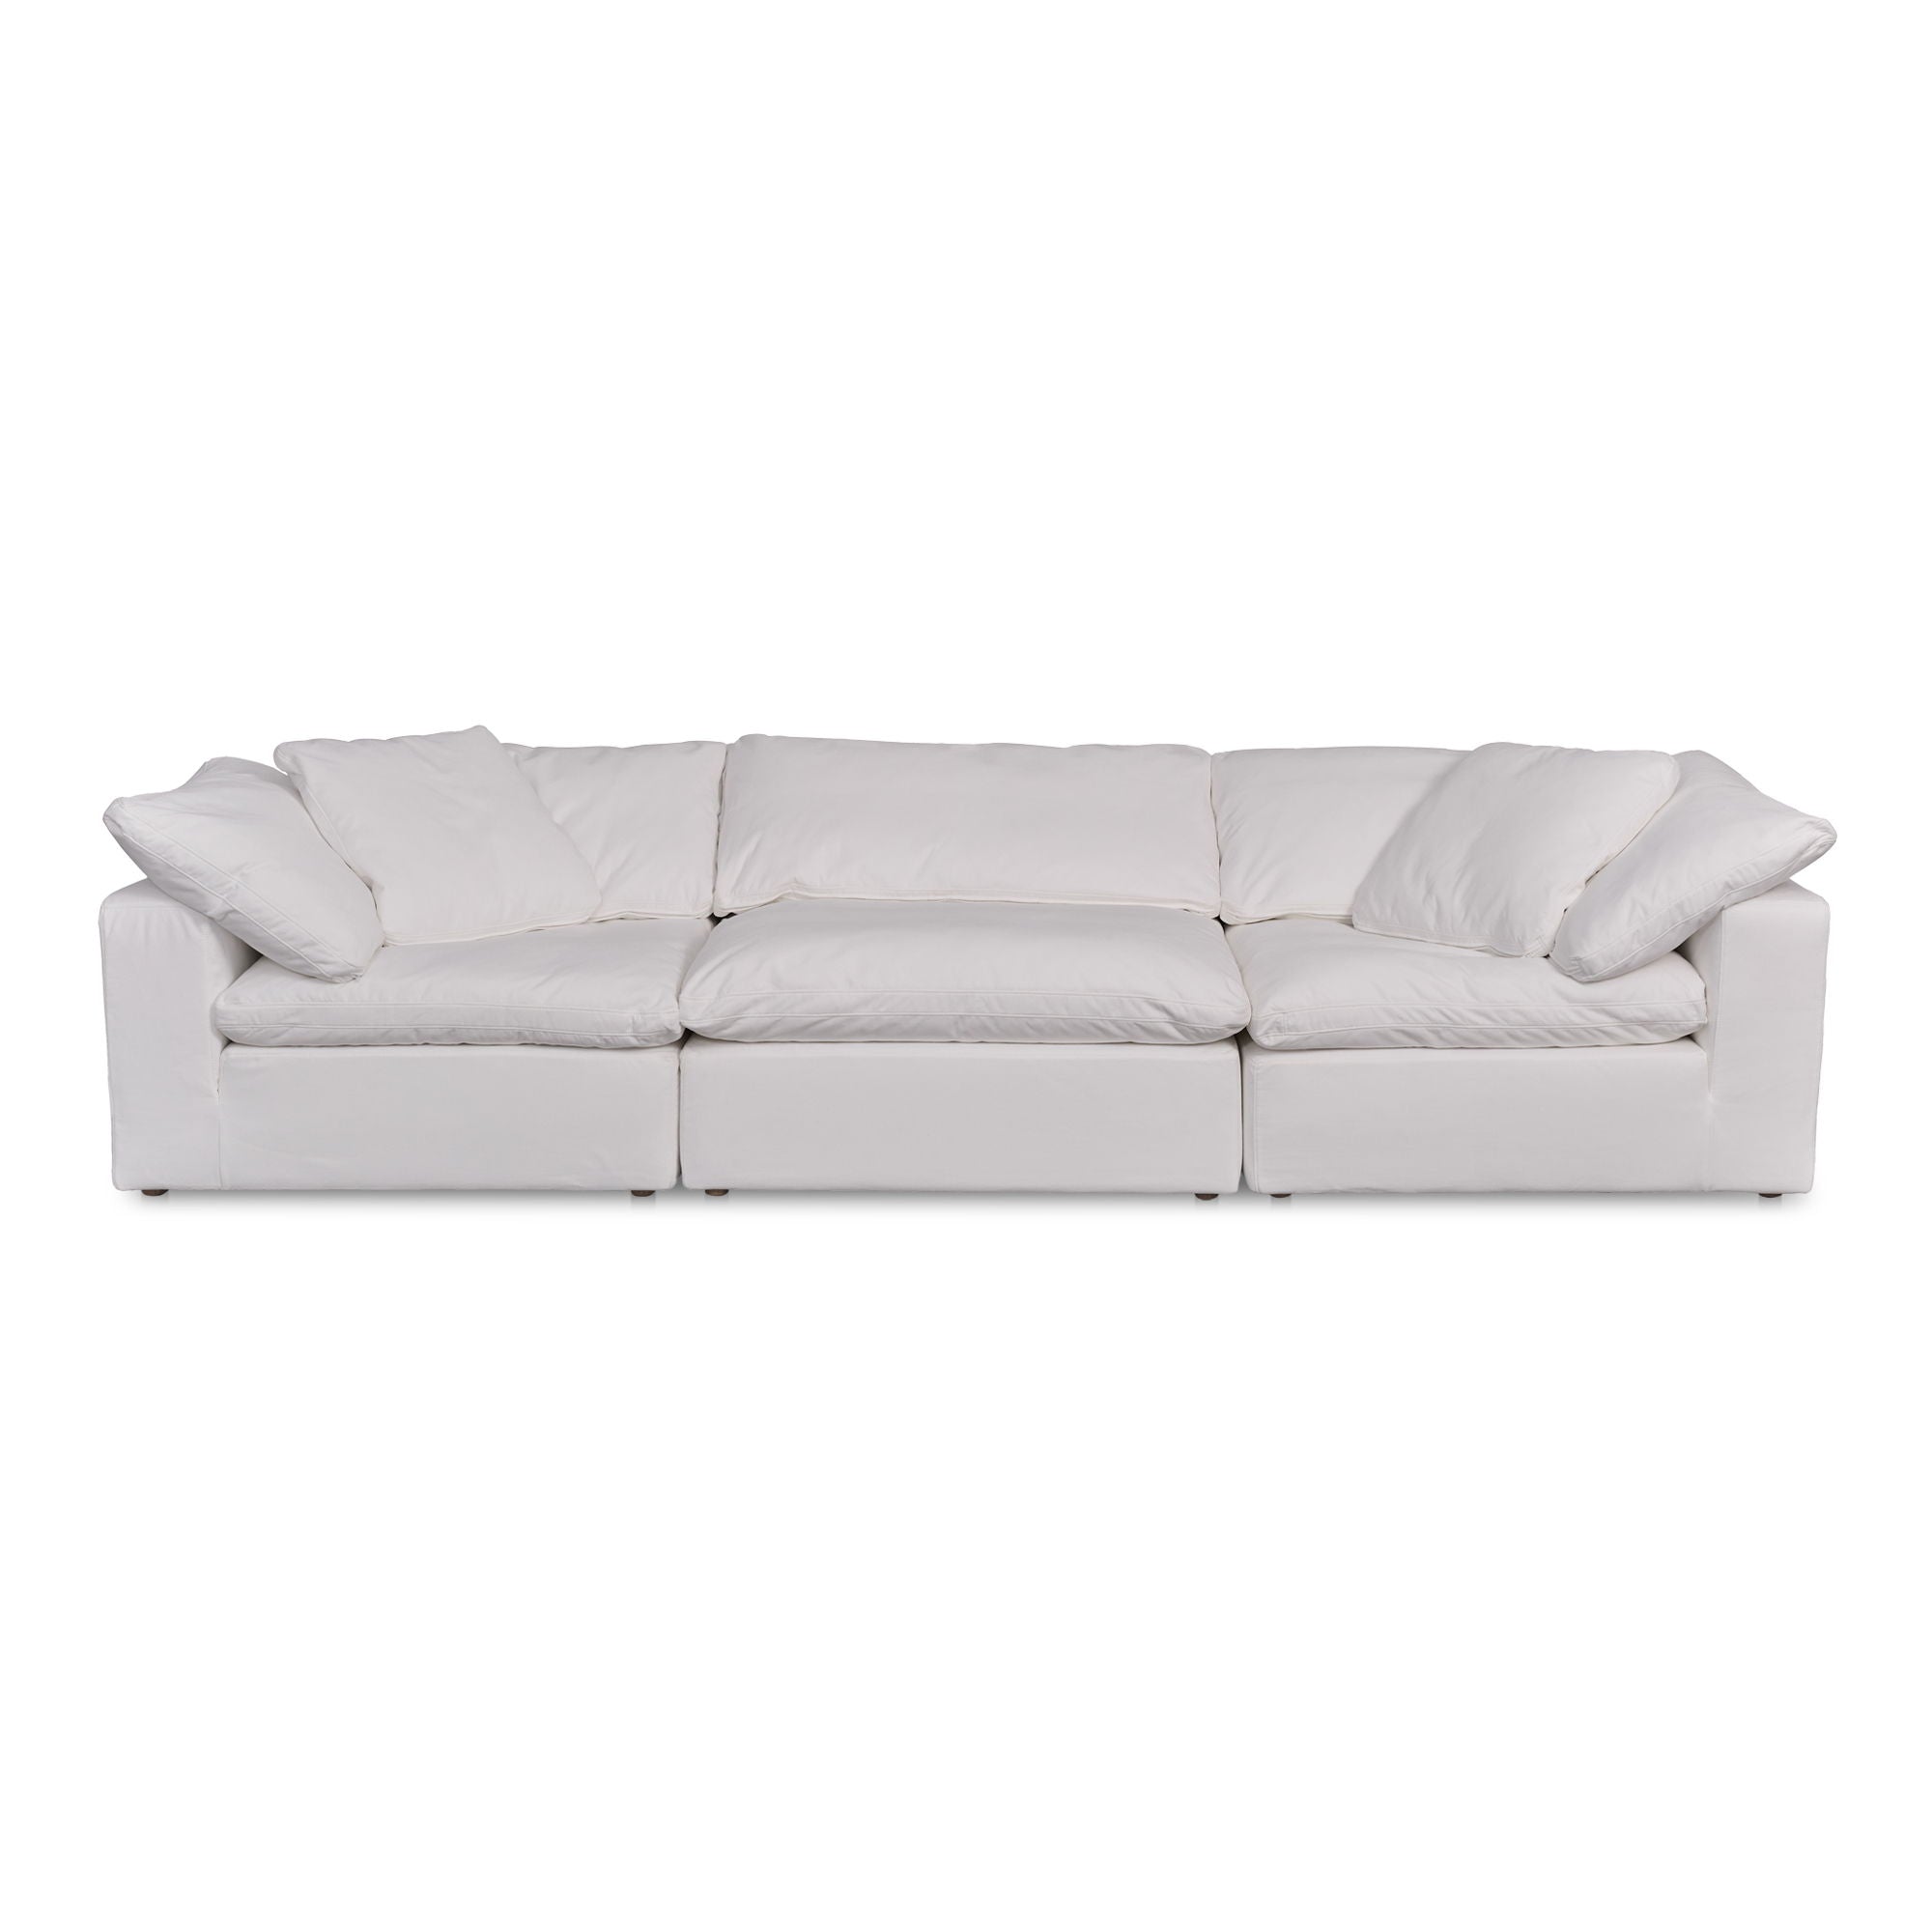 Terra - Modular Sofa Performance Fabric - White